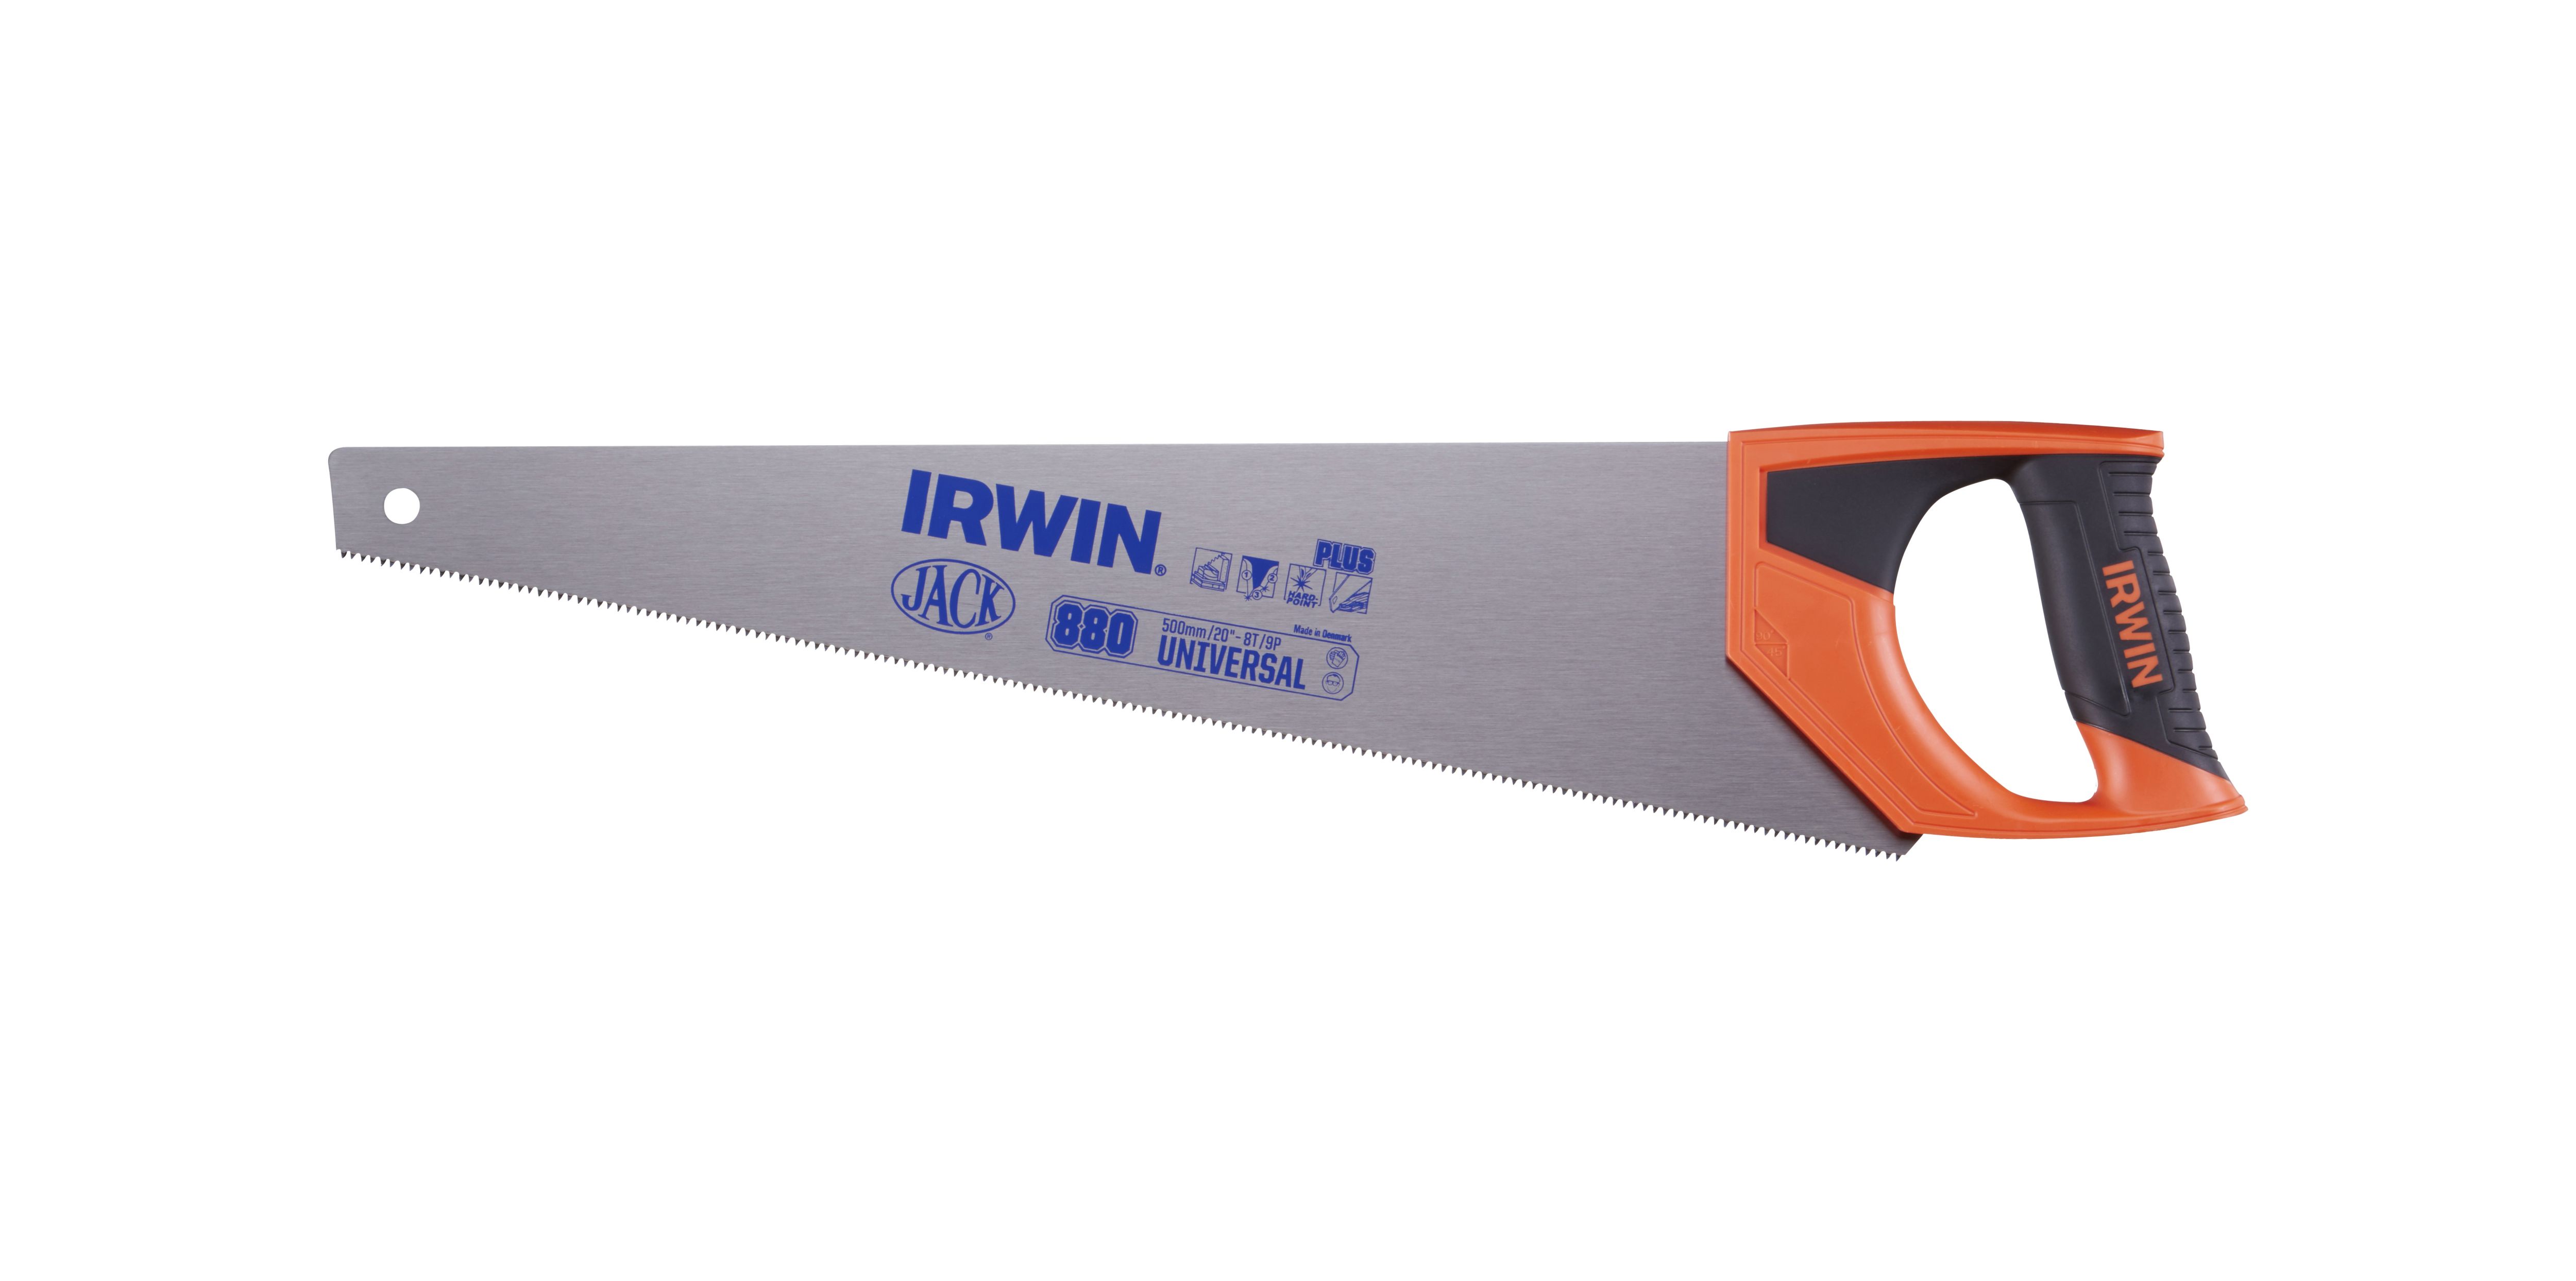 Irwin Jack plus universal 500mm Fine Panel saw, 8 TPI